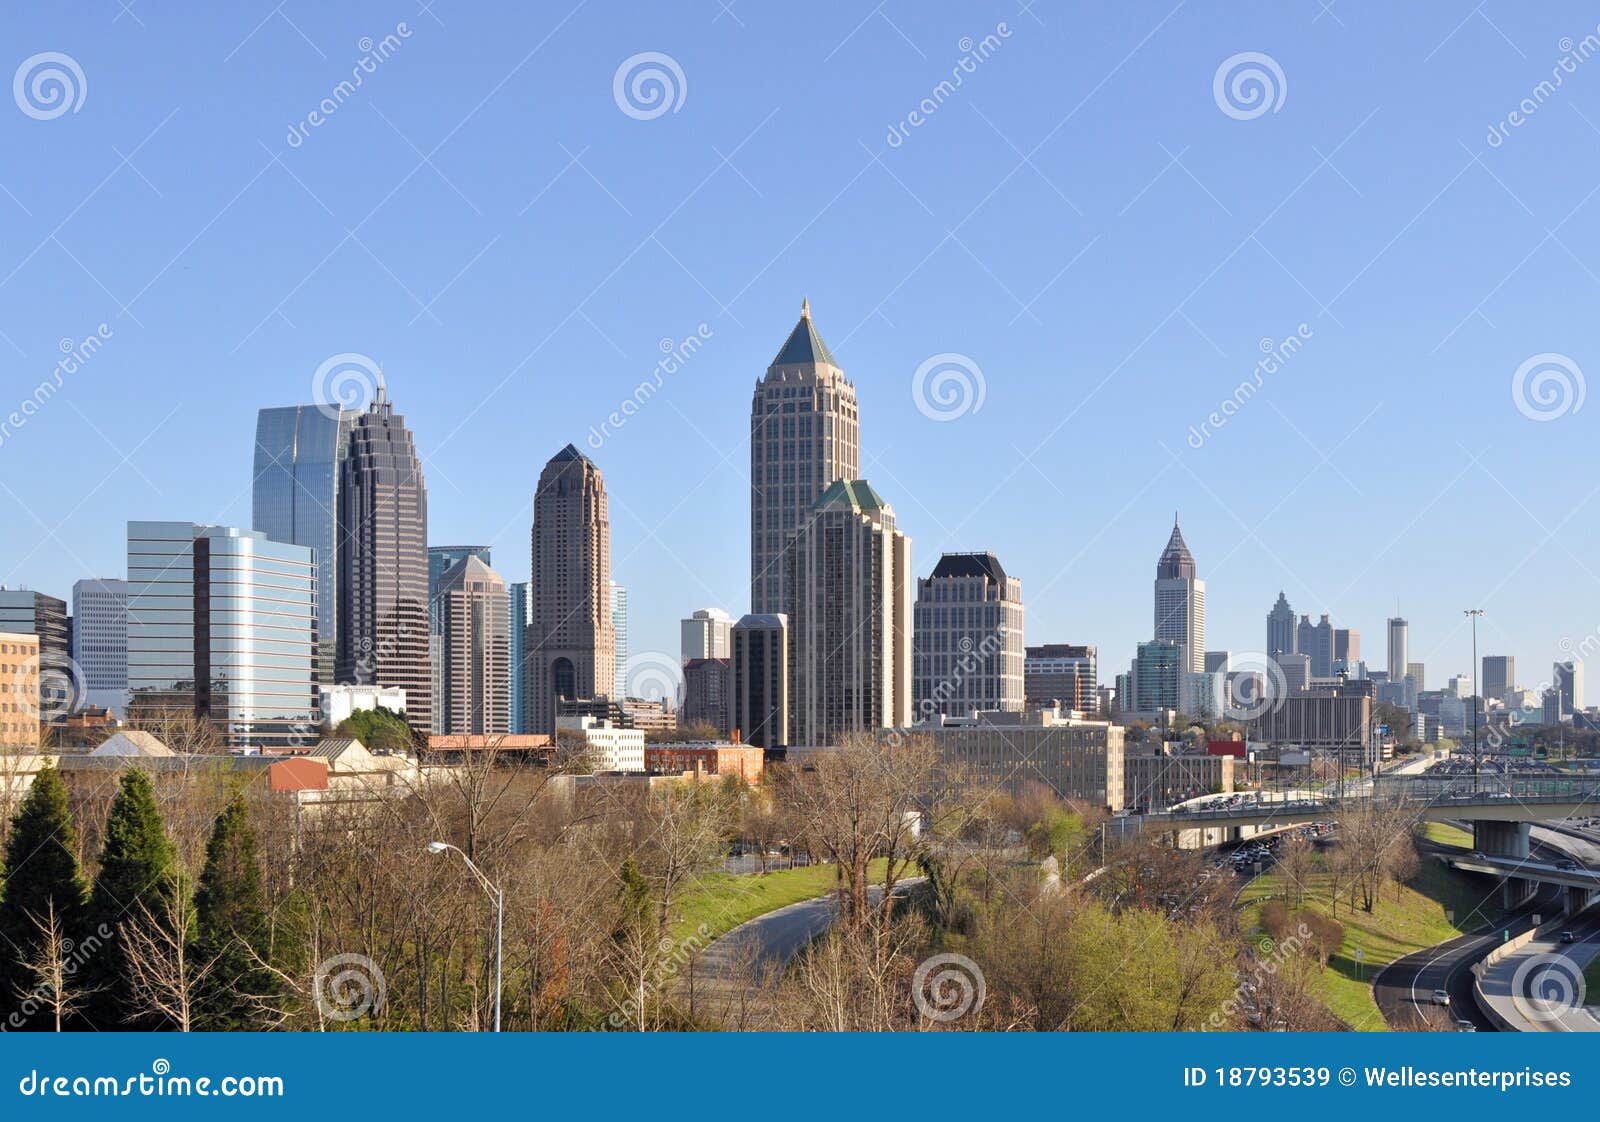 3,532 Atlanta Background Stock Photos - Free & Royalty-Free Stock Photos  from Dreamstime